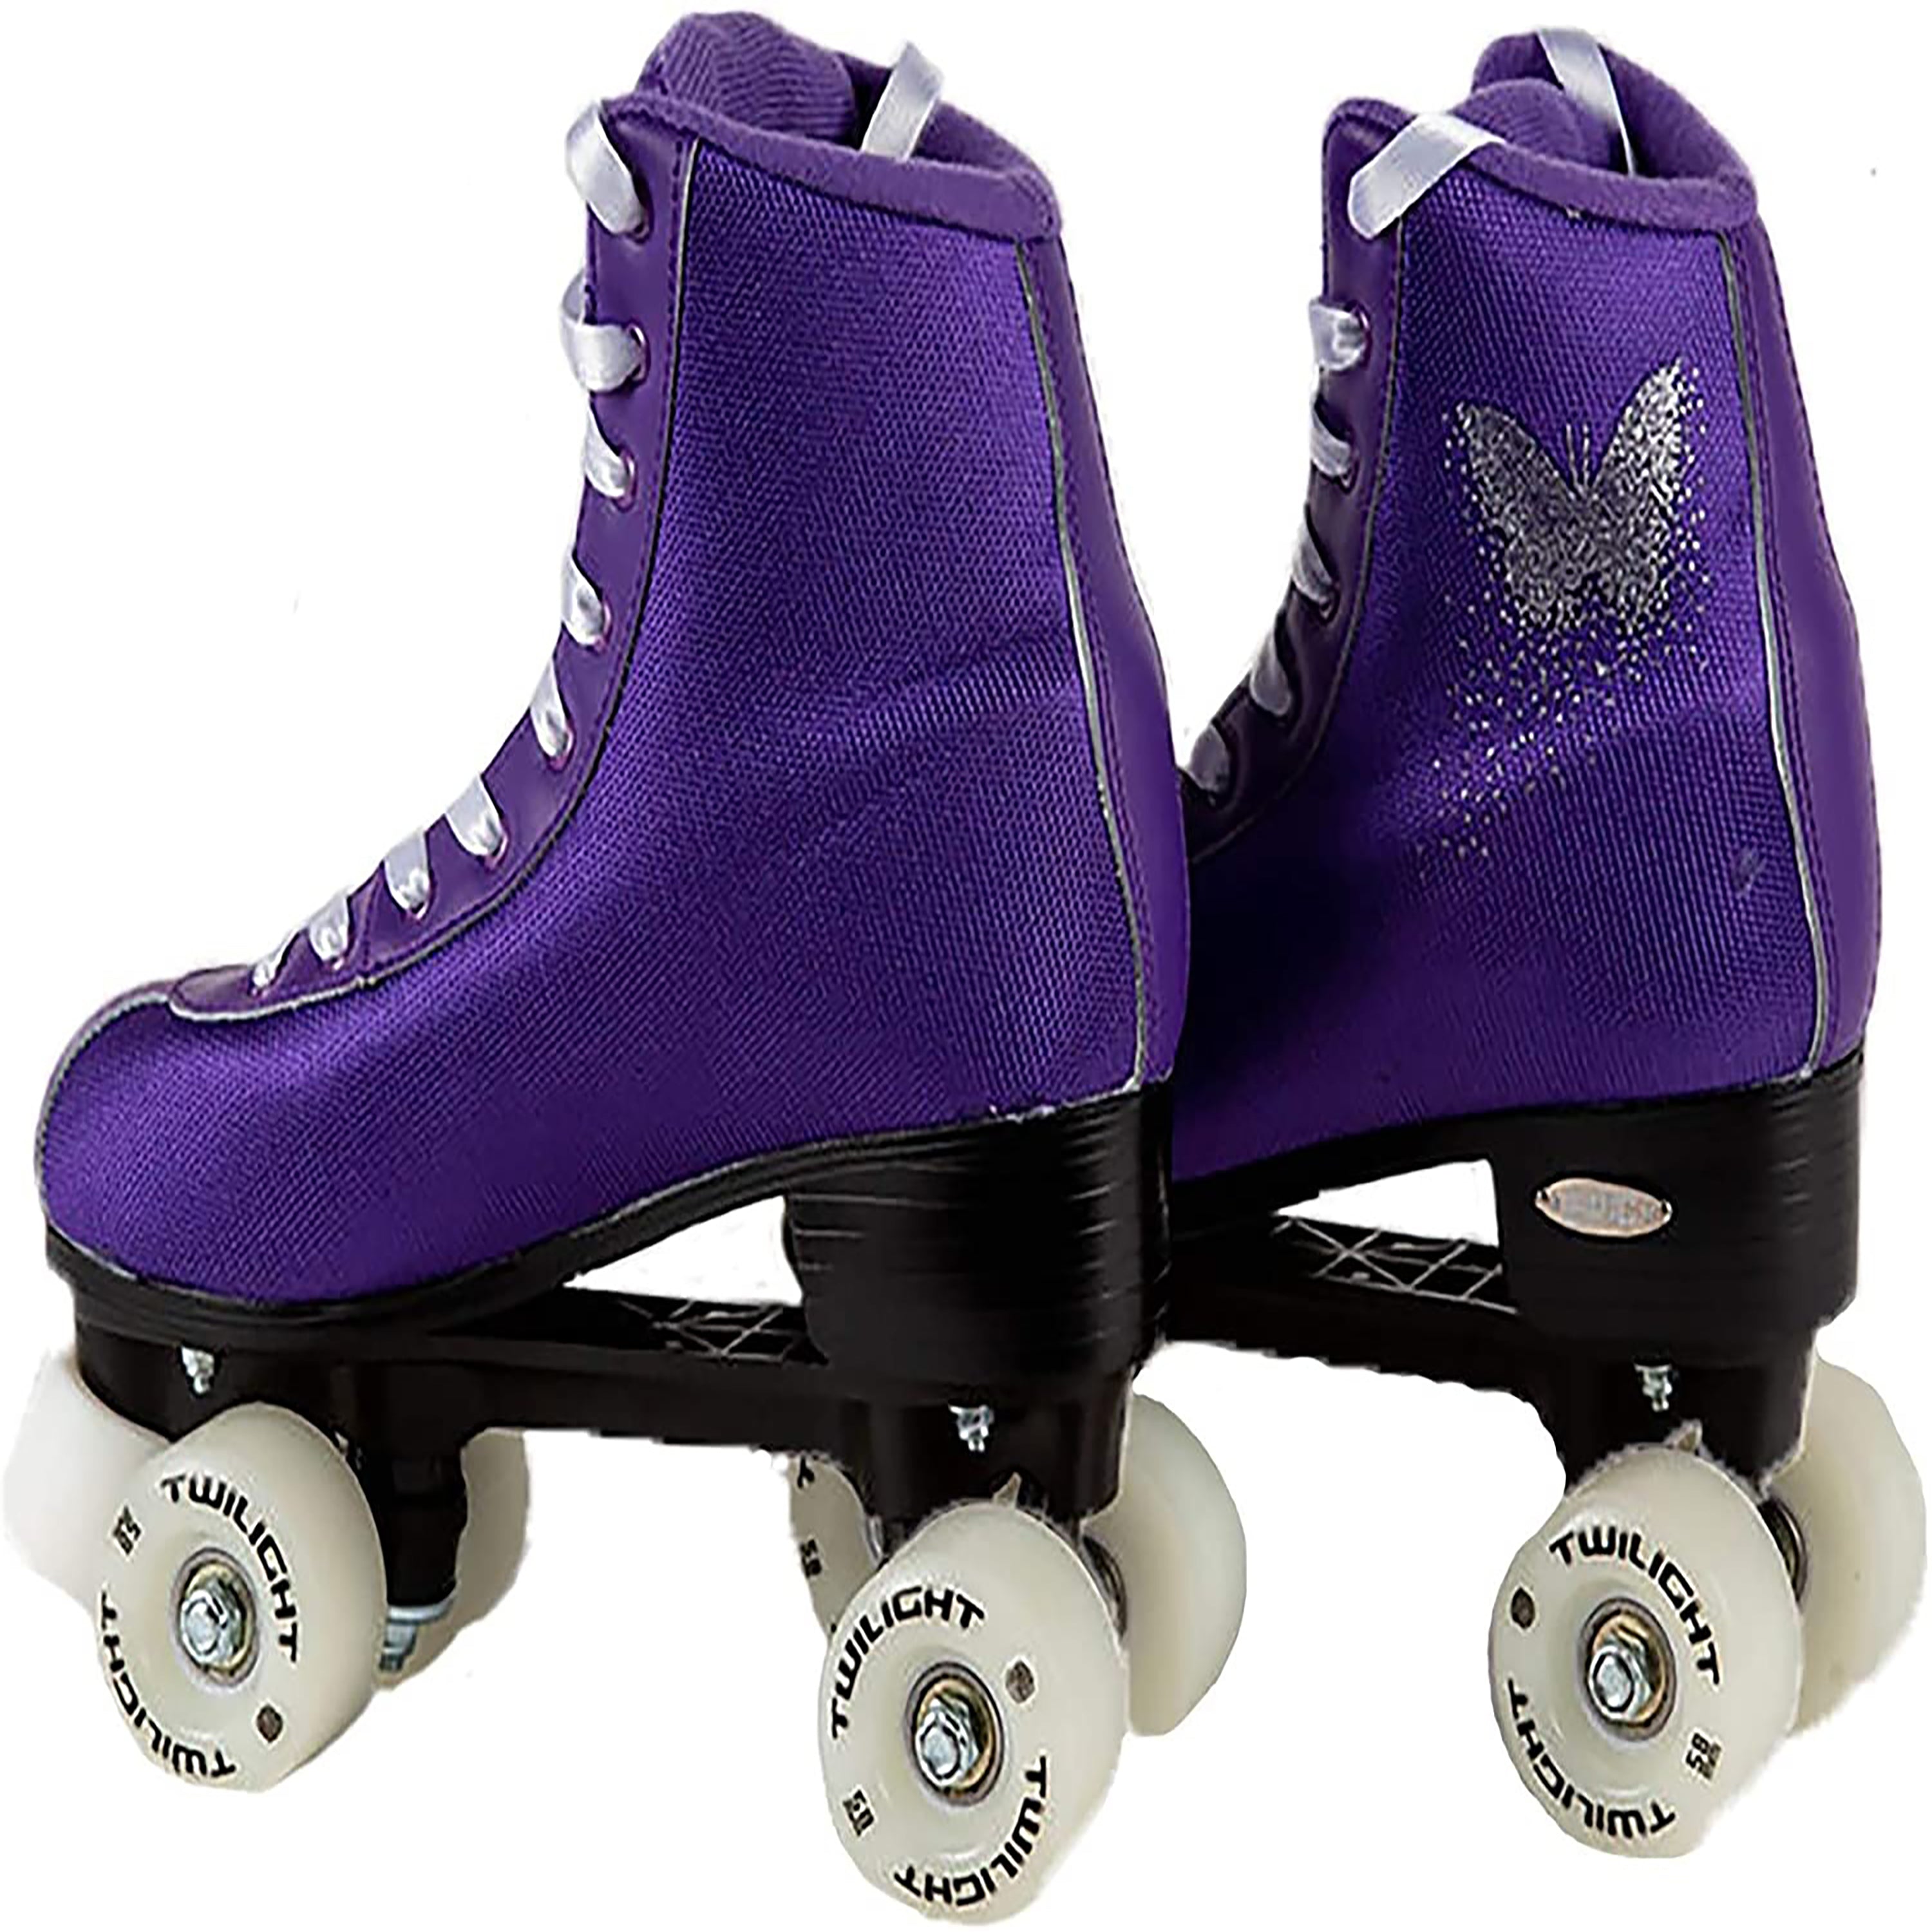 Epic Purple Butterfly LED Quad Skate – LowPriceSkates.com